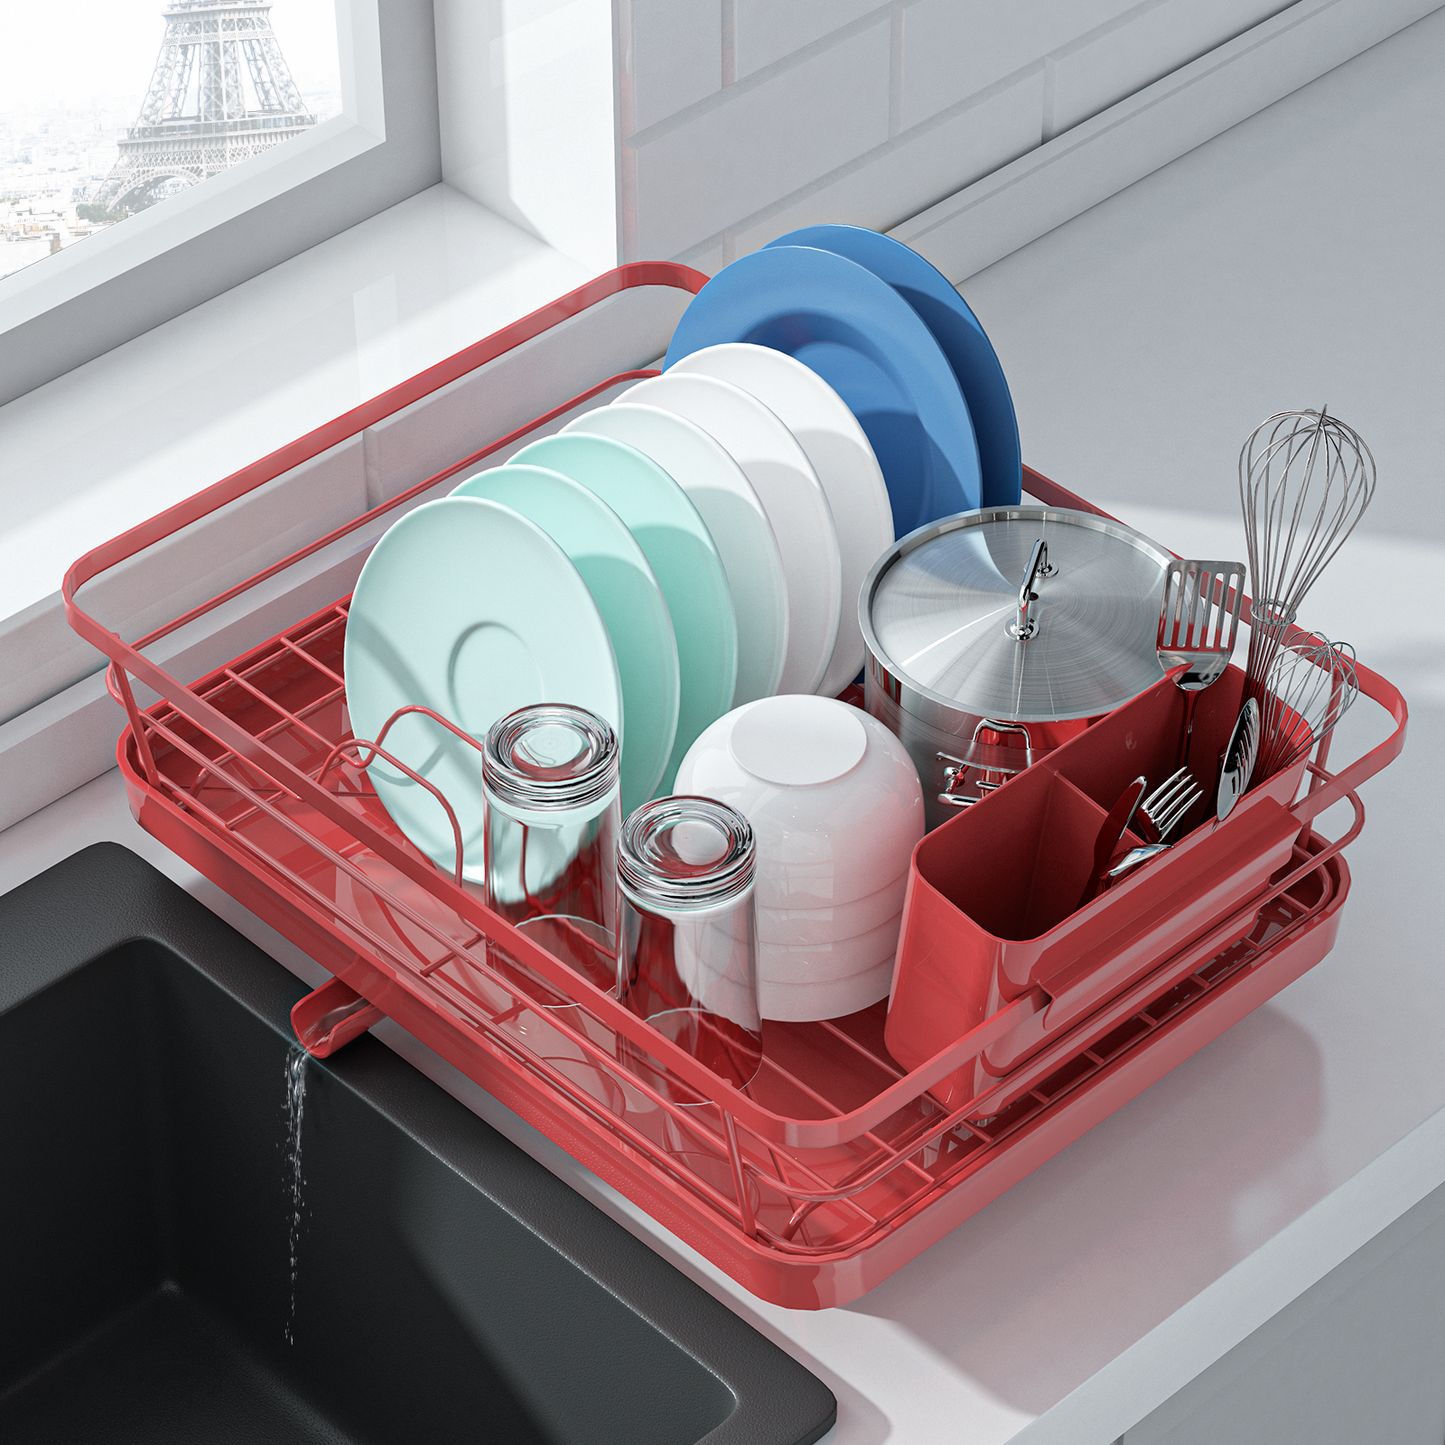  Kitsure Dish Drying Rack - Large-Capacity Dish Rack